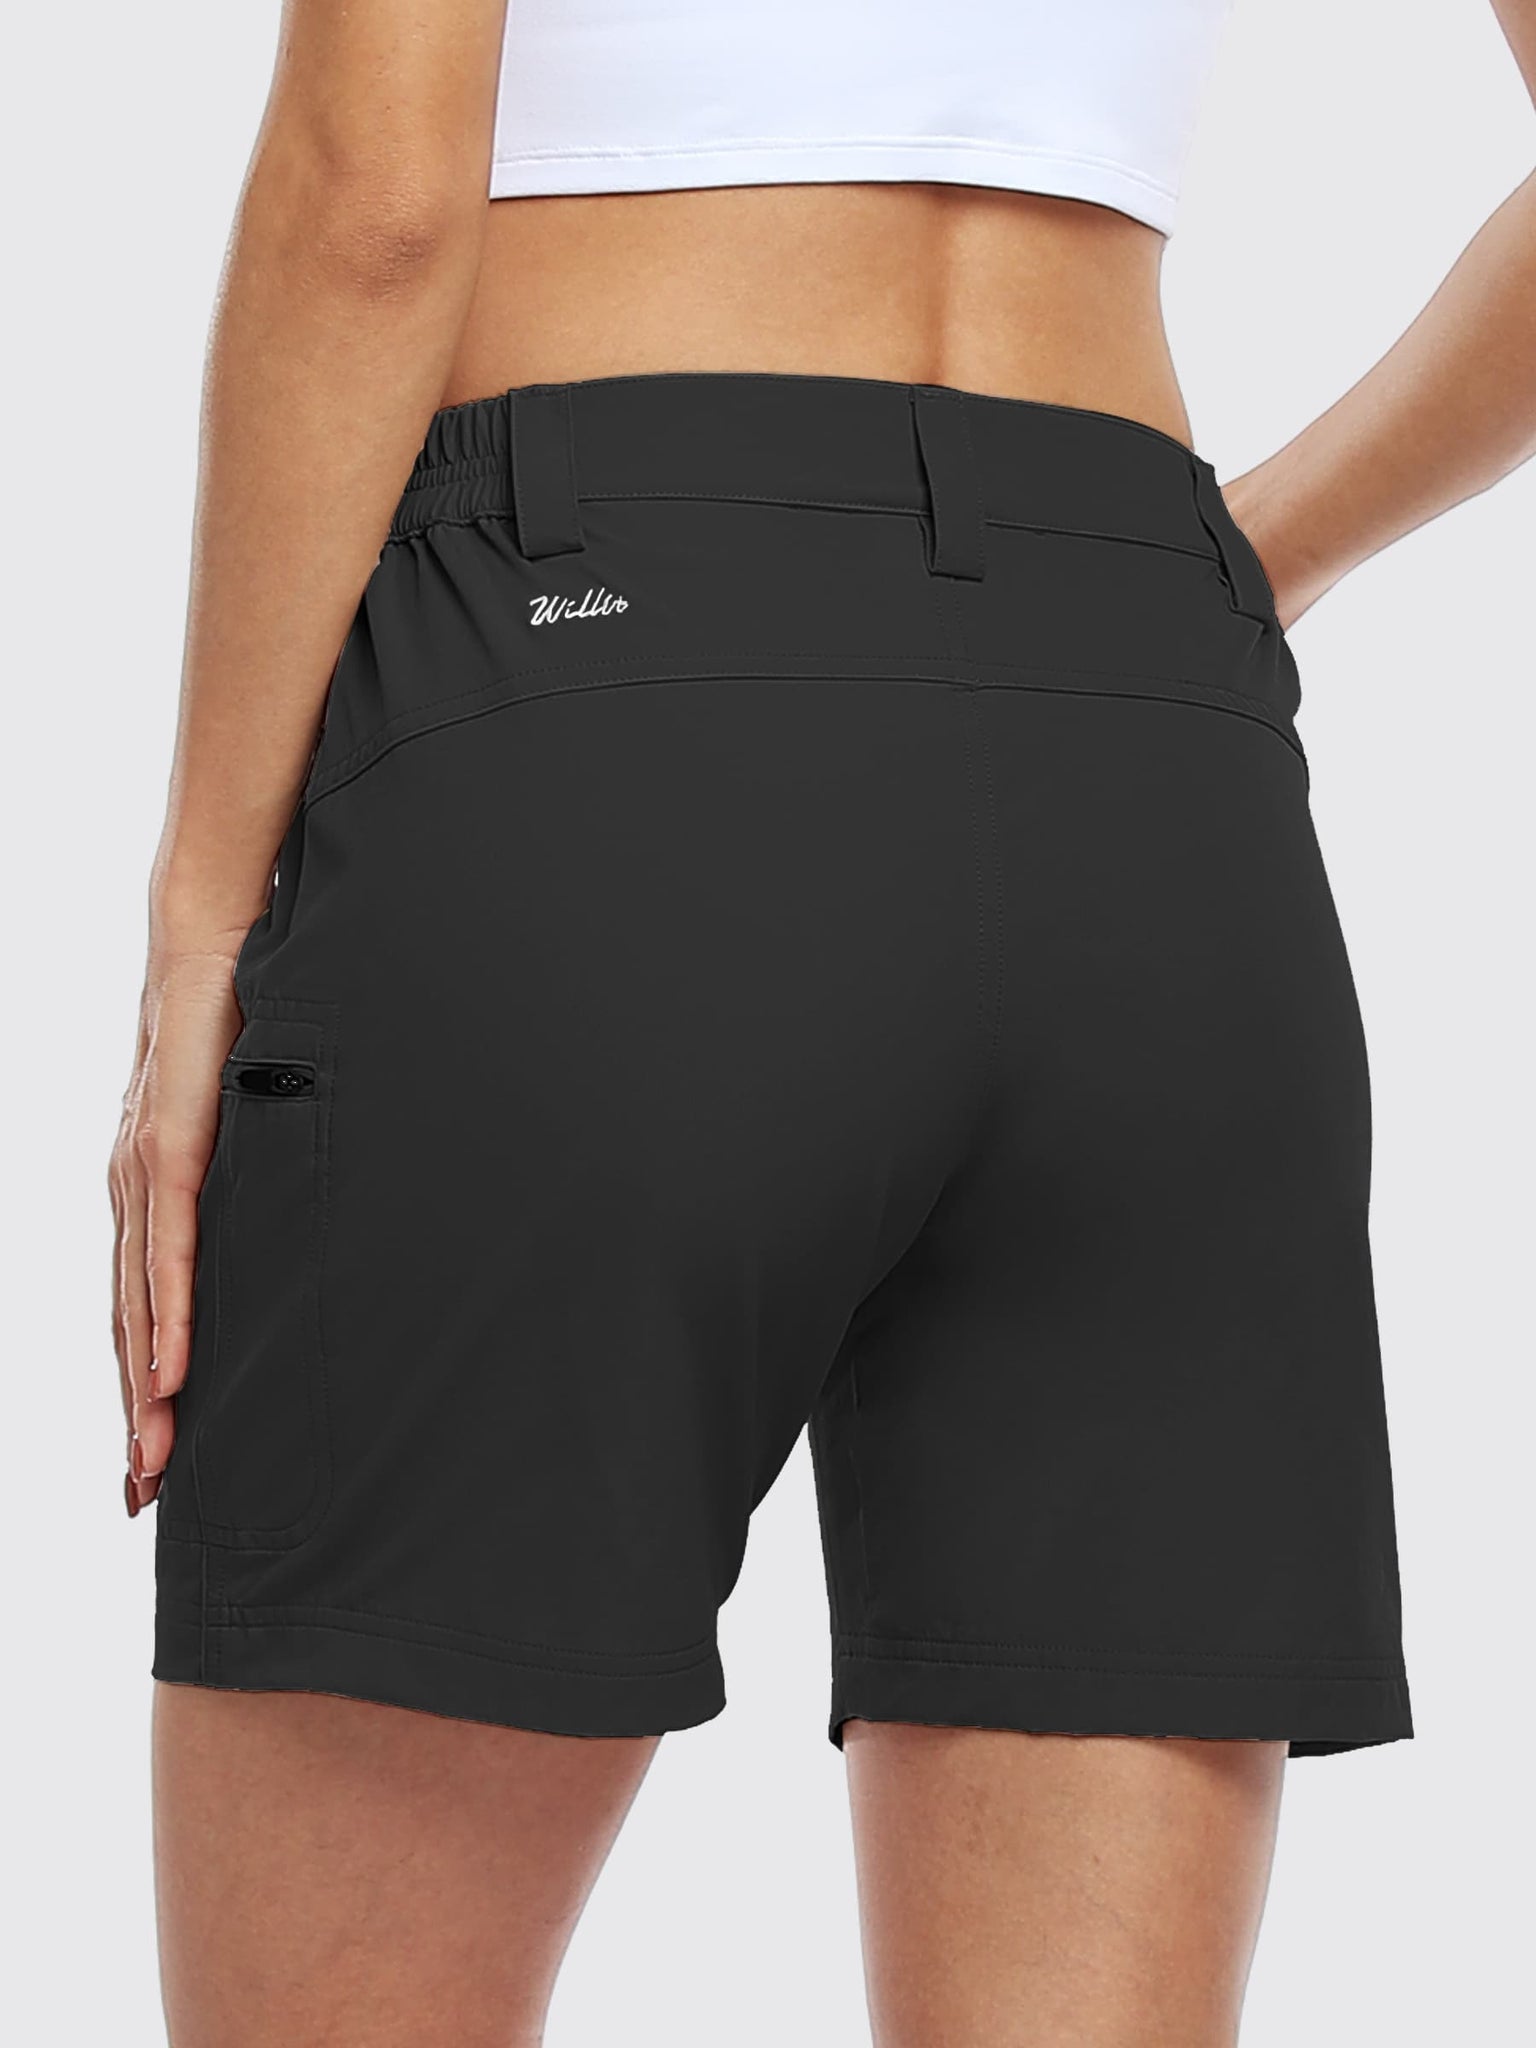 Willit Women's Outdoor Cargo Shorts 6 Inseam_Black_model5